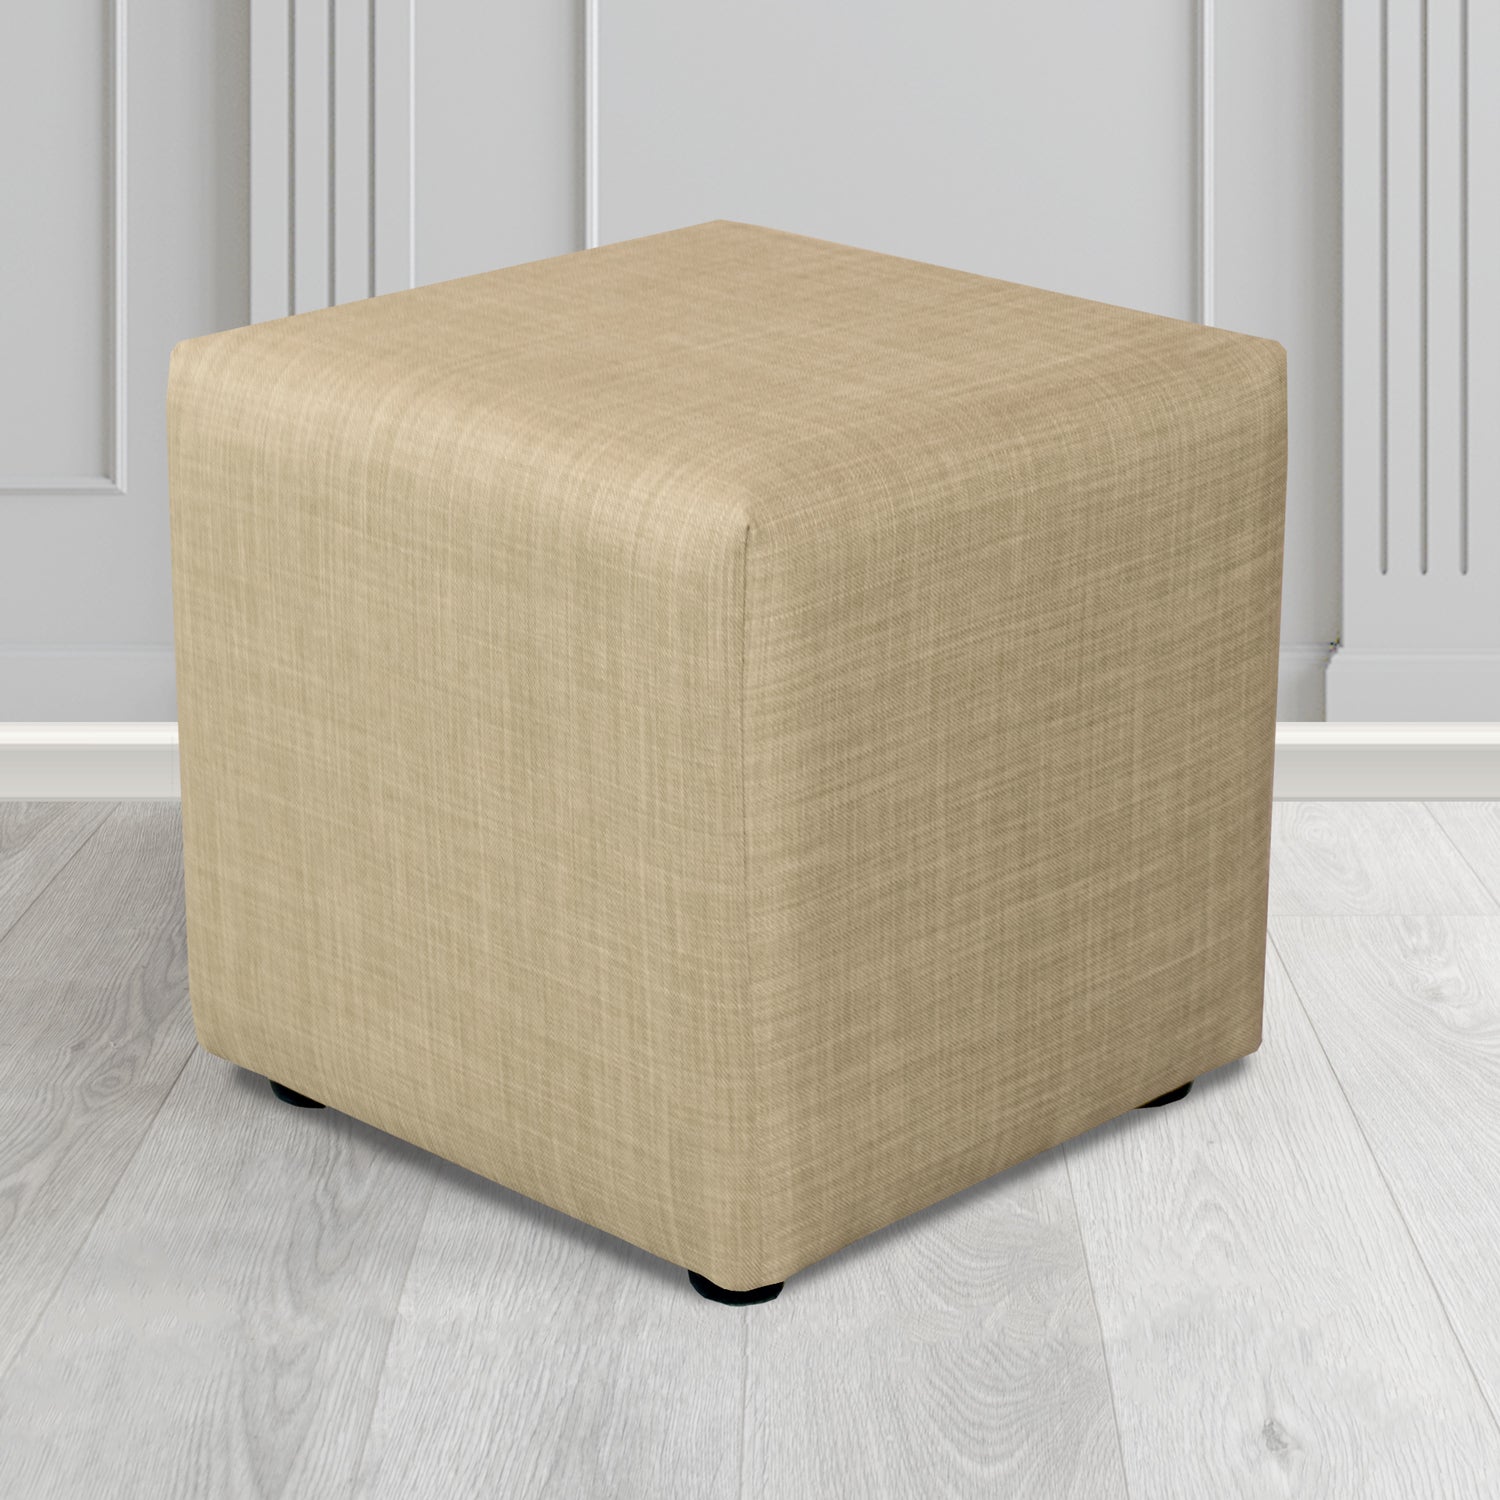 Paris Charles Mink Plain Linen Fabric Cube Footstool